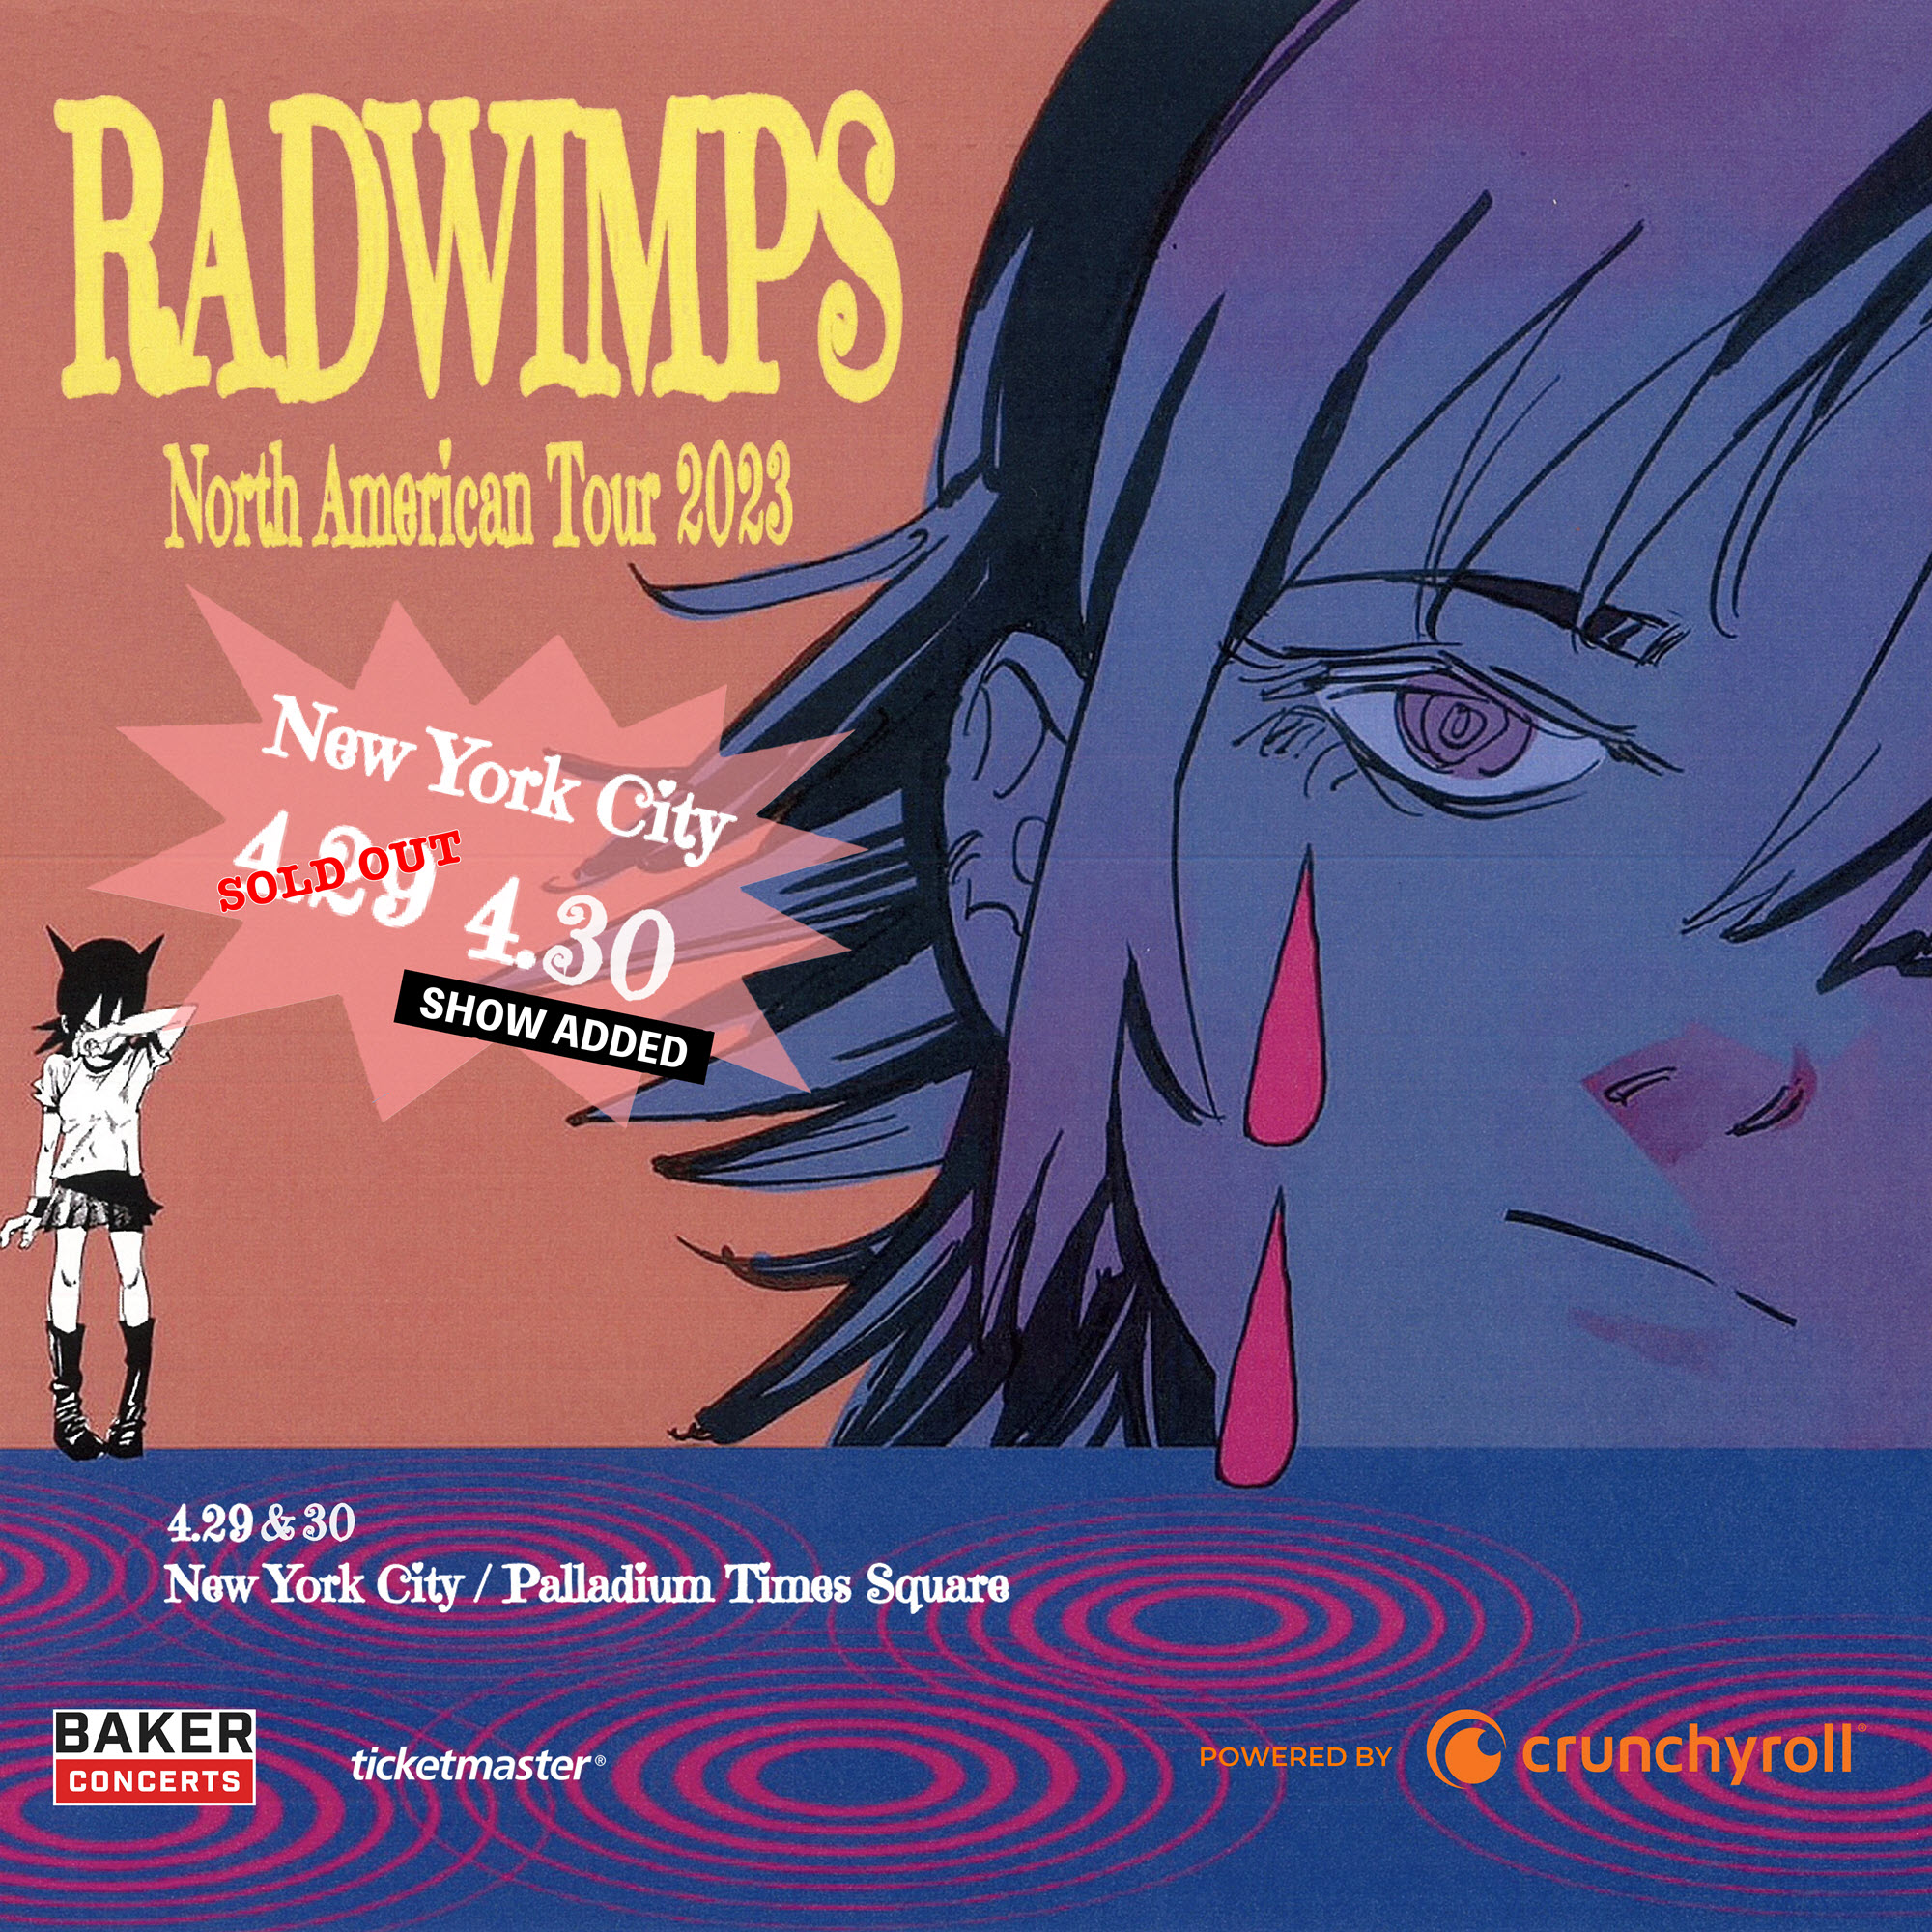 Radwimps 2 shows